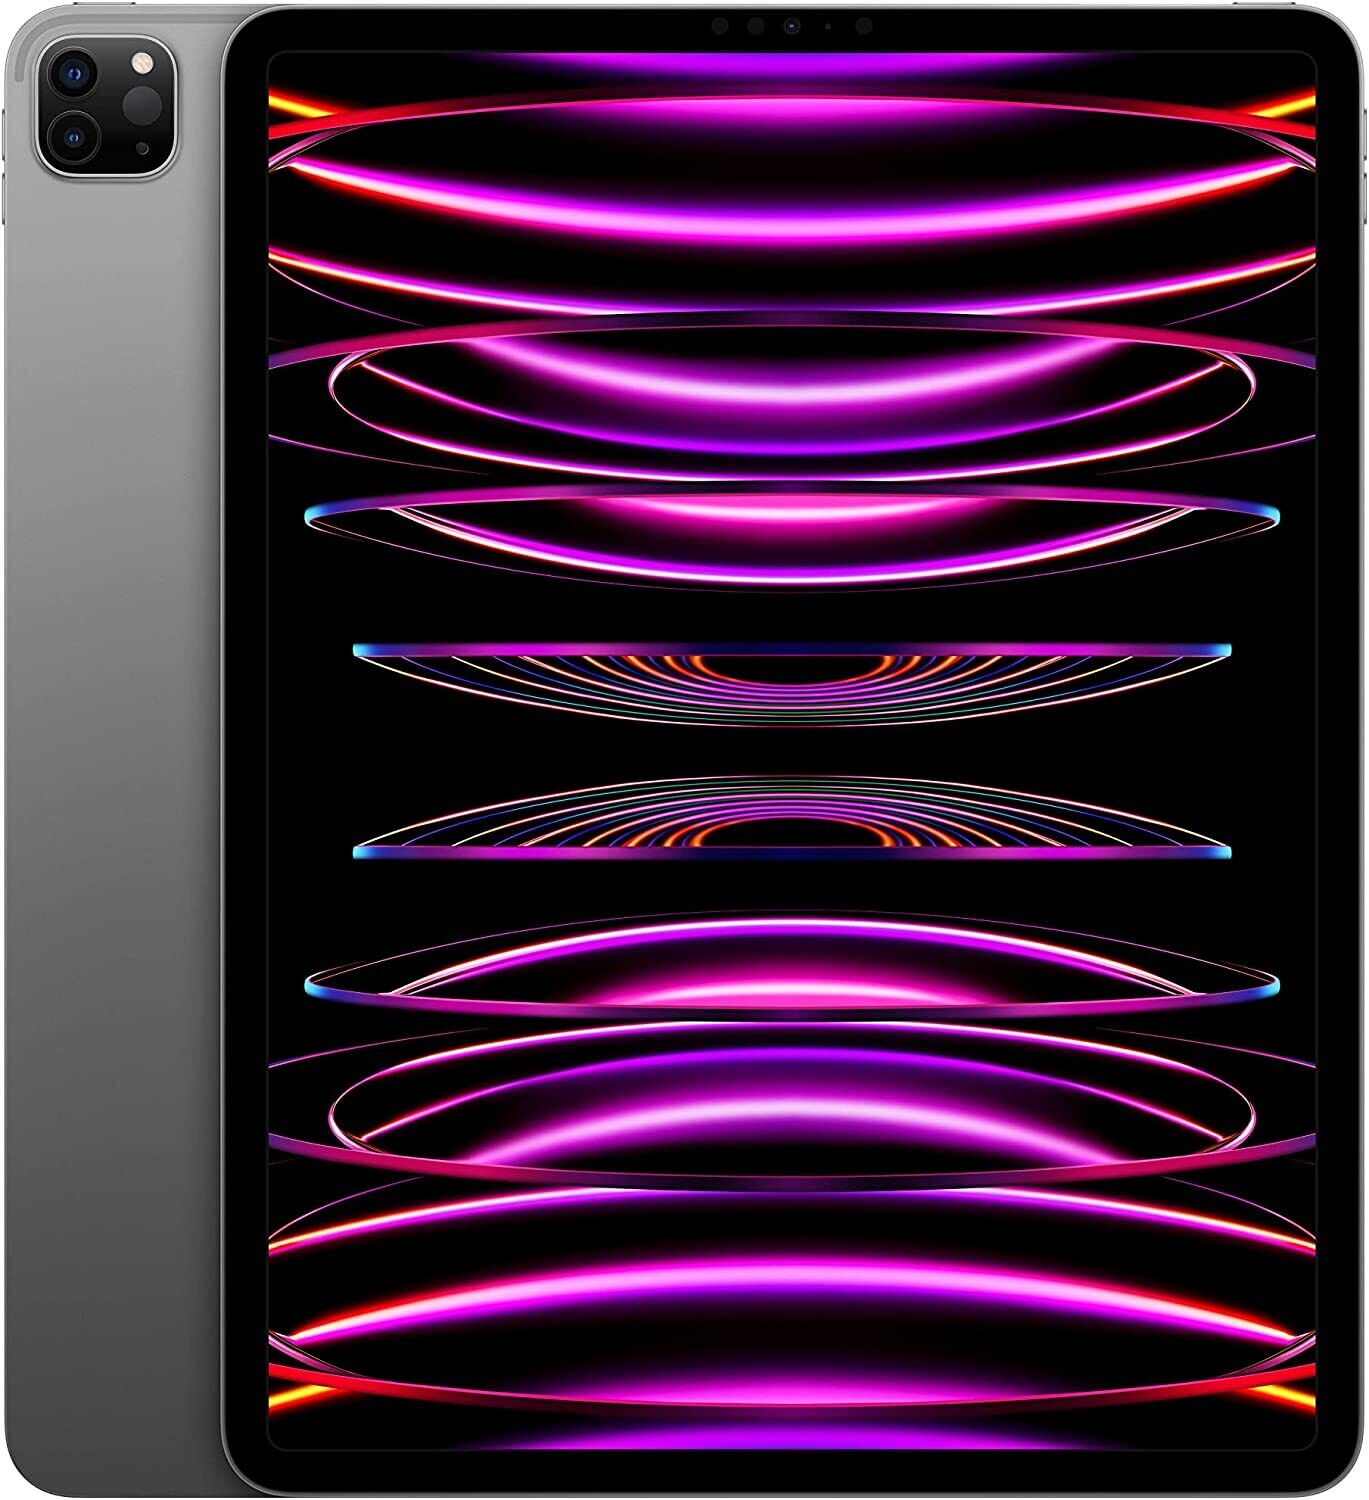 2022 Apple 11-inch iPad Pro (Wi-Fi + Cellular, 512GB) - Space Gray (4th Generation)